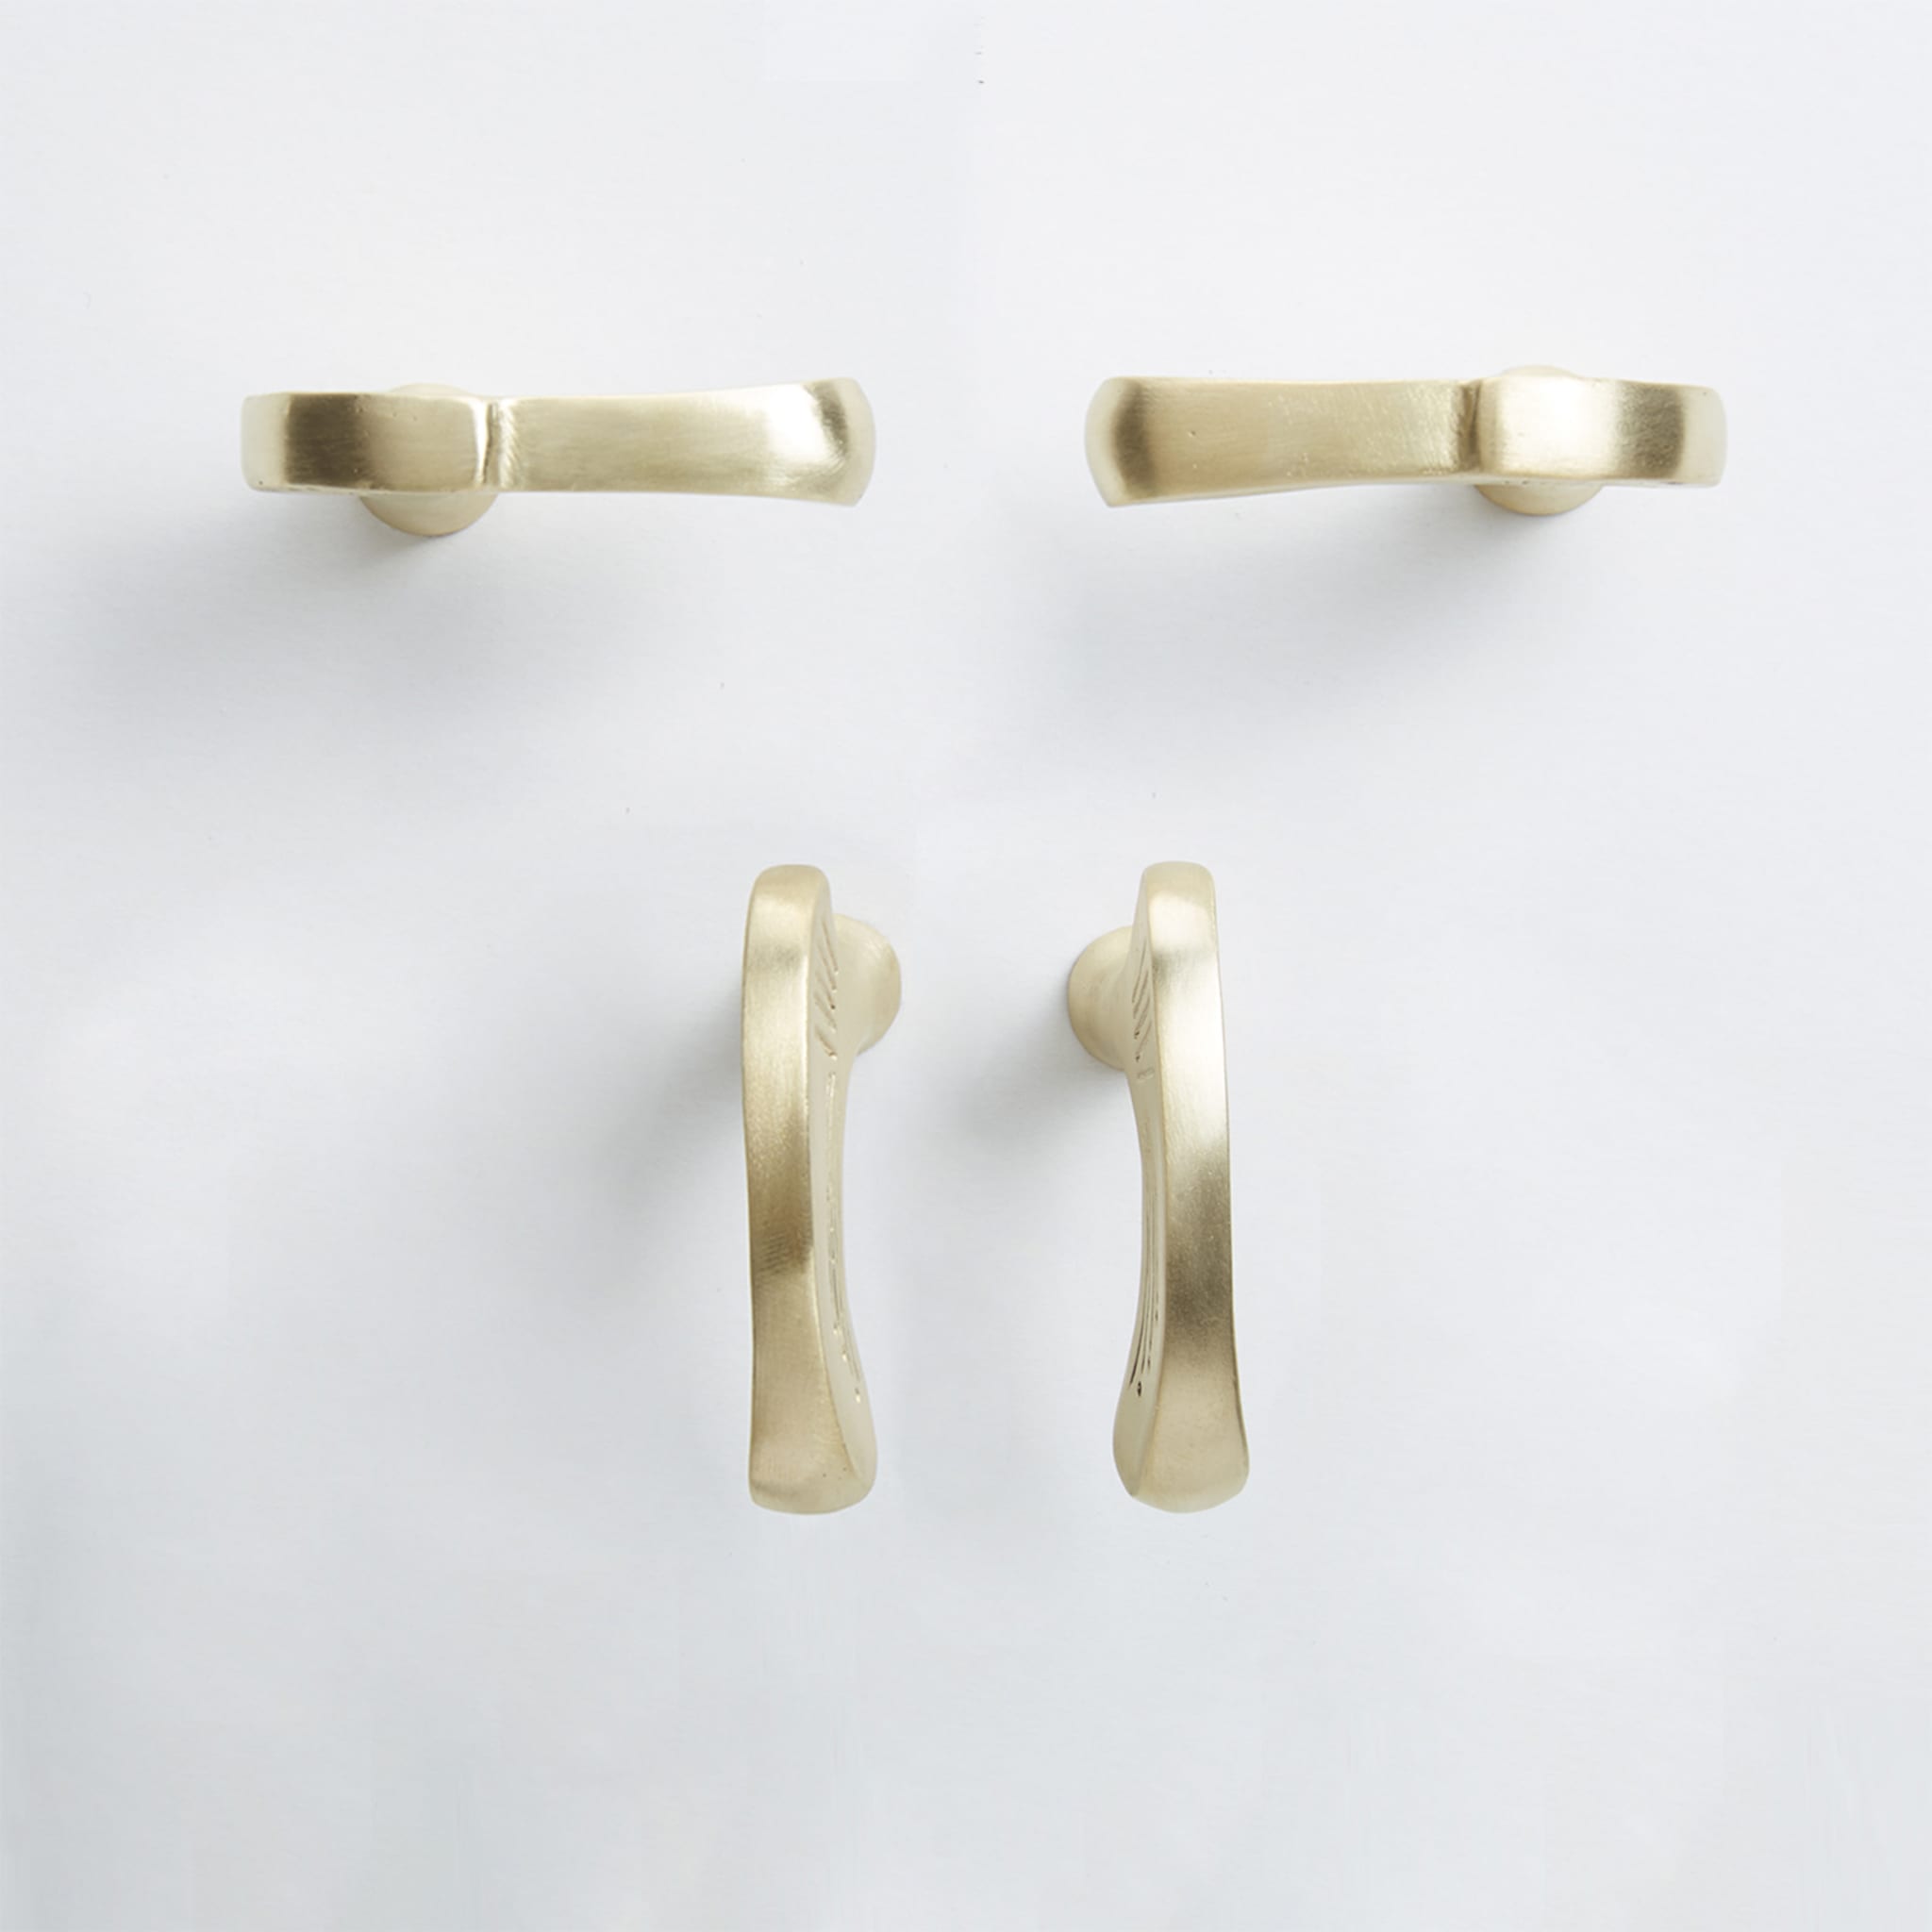 Inca Evolution Set of 4 Brass Door Knobs #1 by Nicole Valenti - Alternative view 1